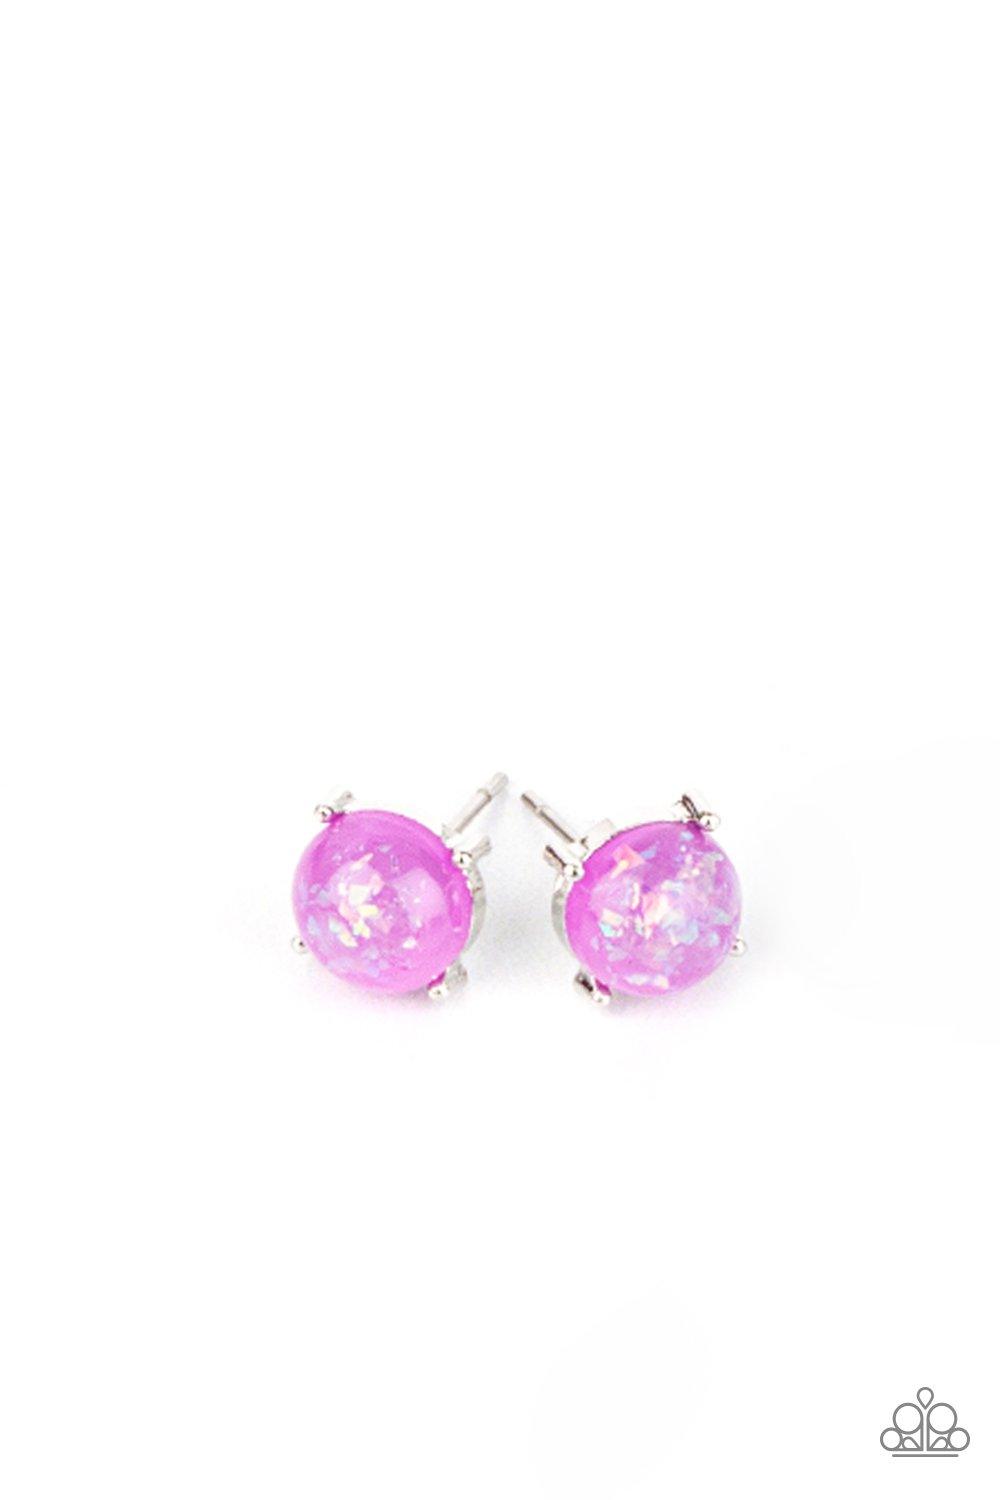 Starlet Shimmer Multi Colored Earrings - Jewelry By Bretta